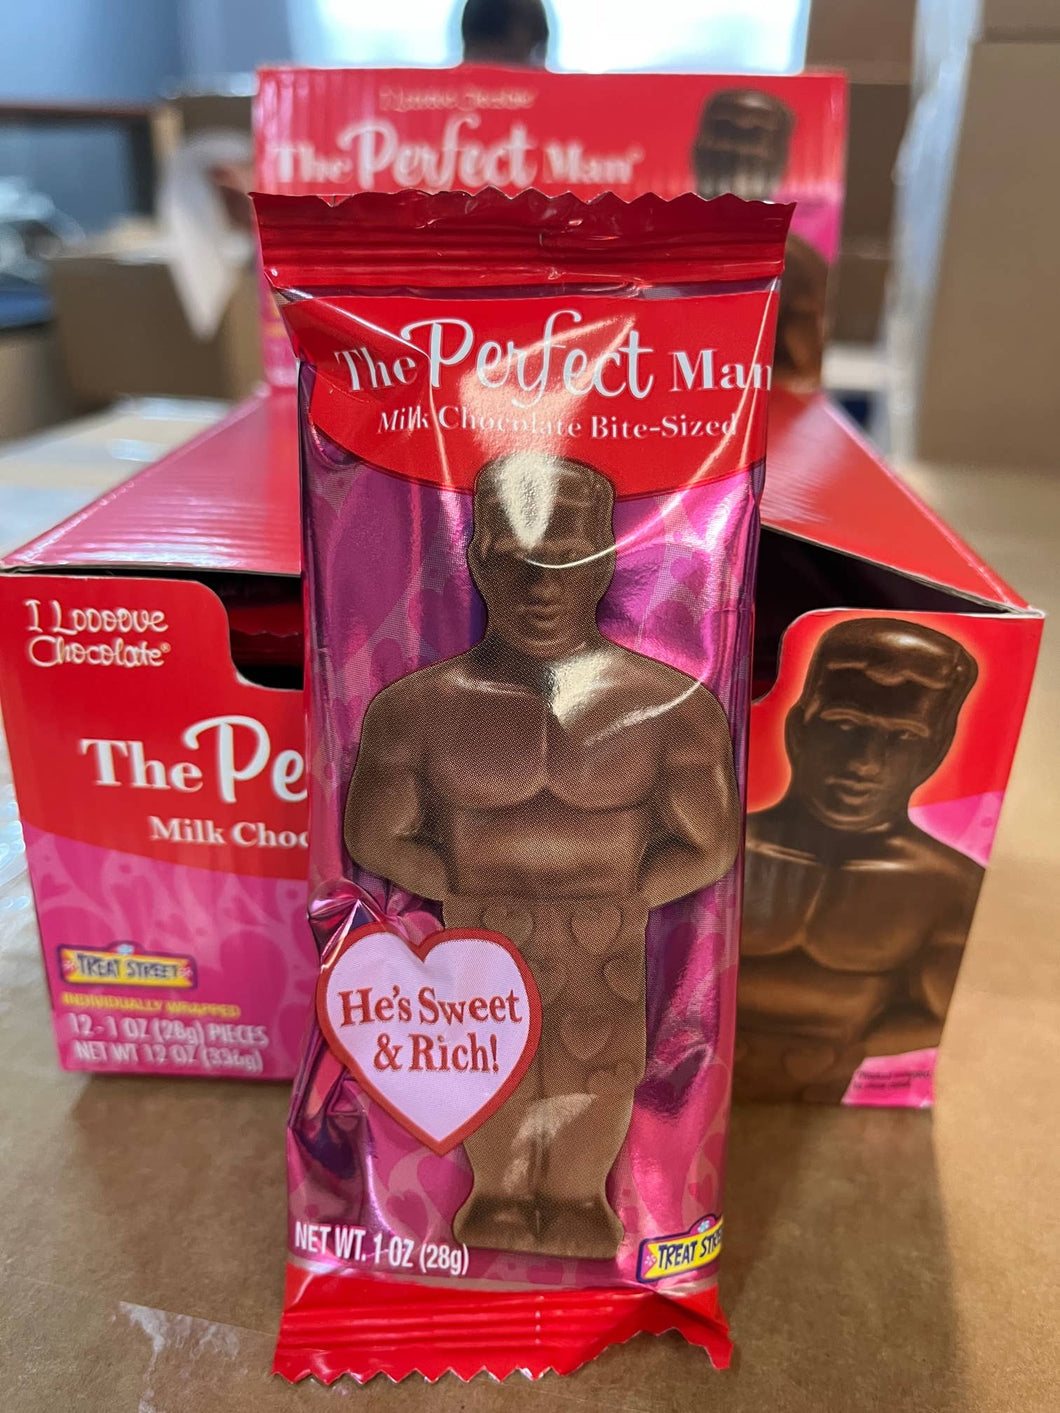 The Perfect Man! Chocolate Bar